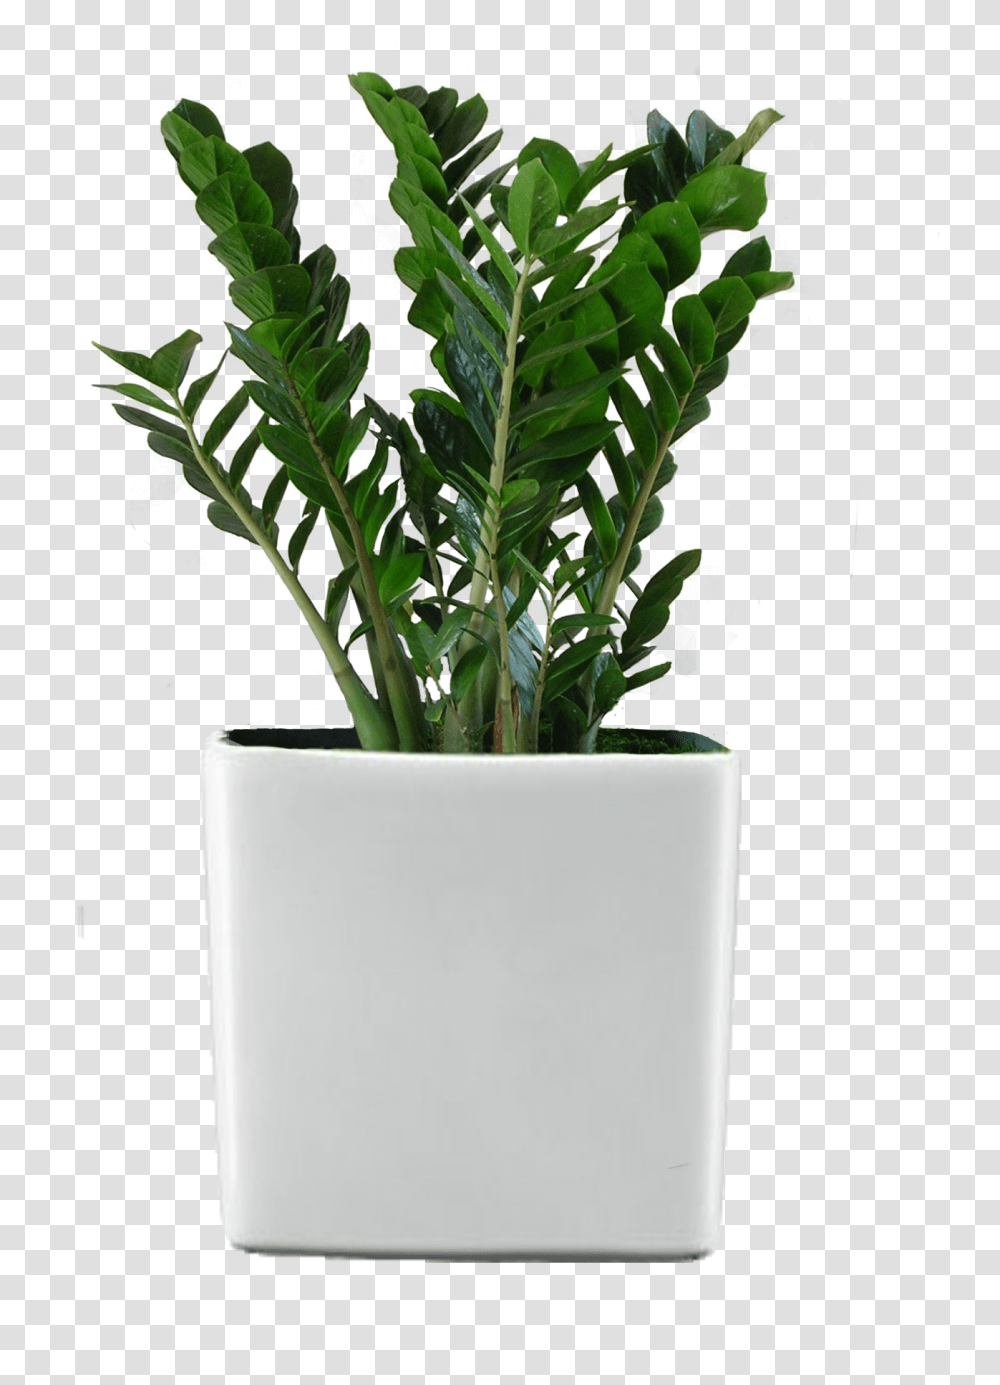 Ficus Retusa Houseplant Flower Garden Potted Plant Flower Potted Plant Background, Vase, Jar, Pottery, Planter Transparent Png